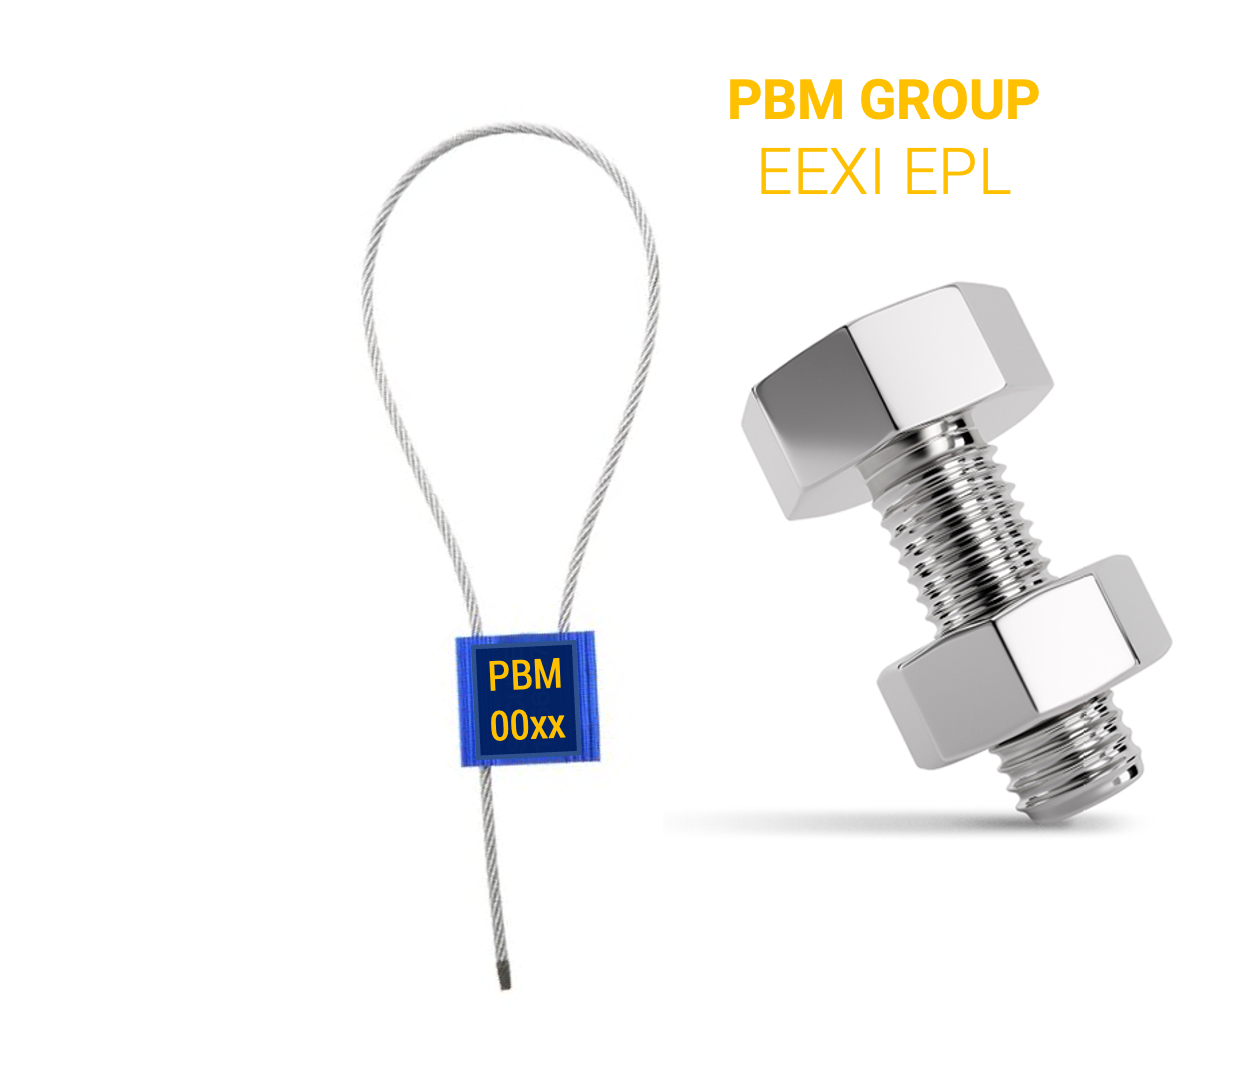 PBM Group's EEXI Engine Power Limitation